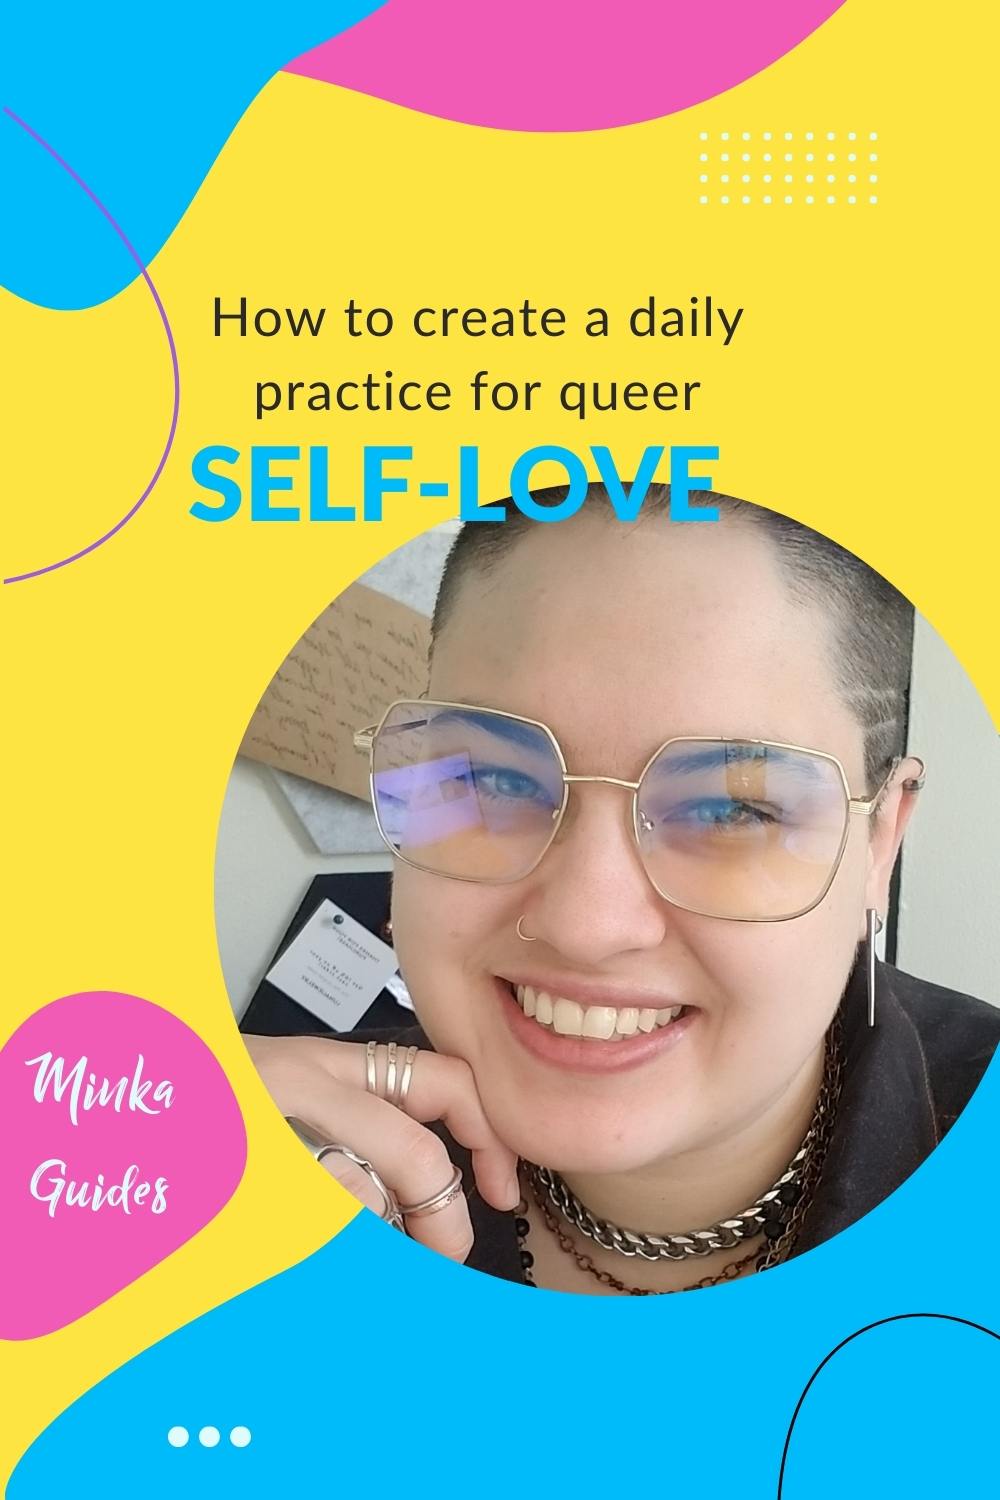 Queer self-love | Minka Guides